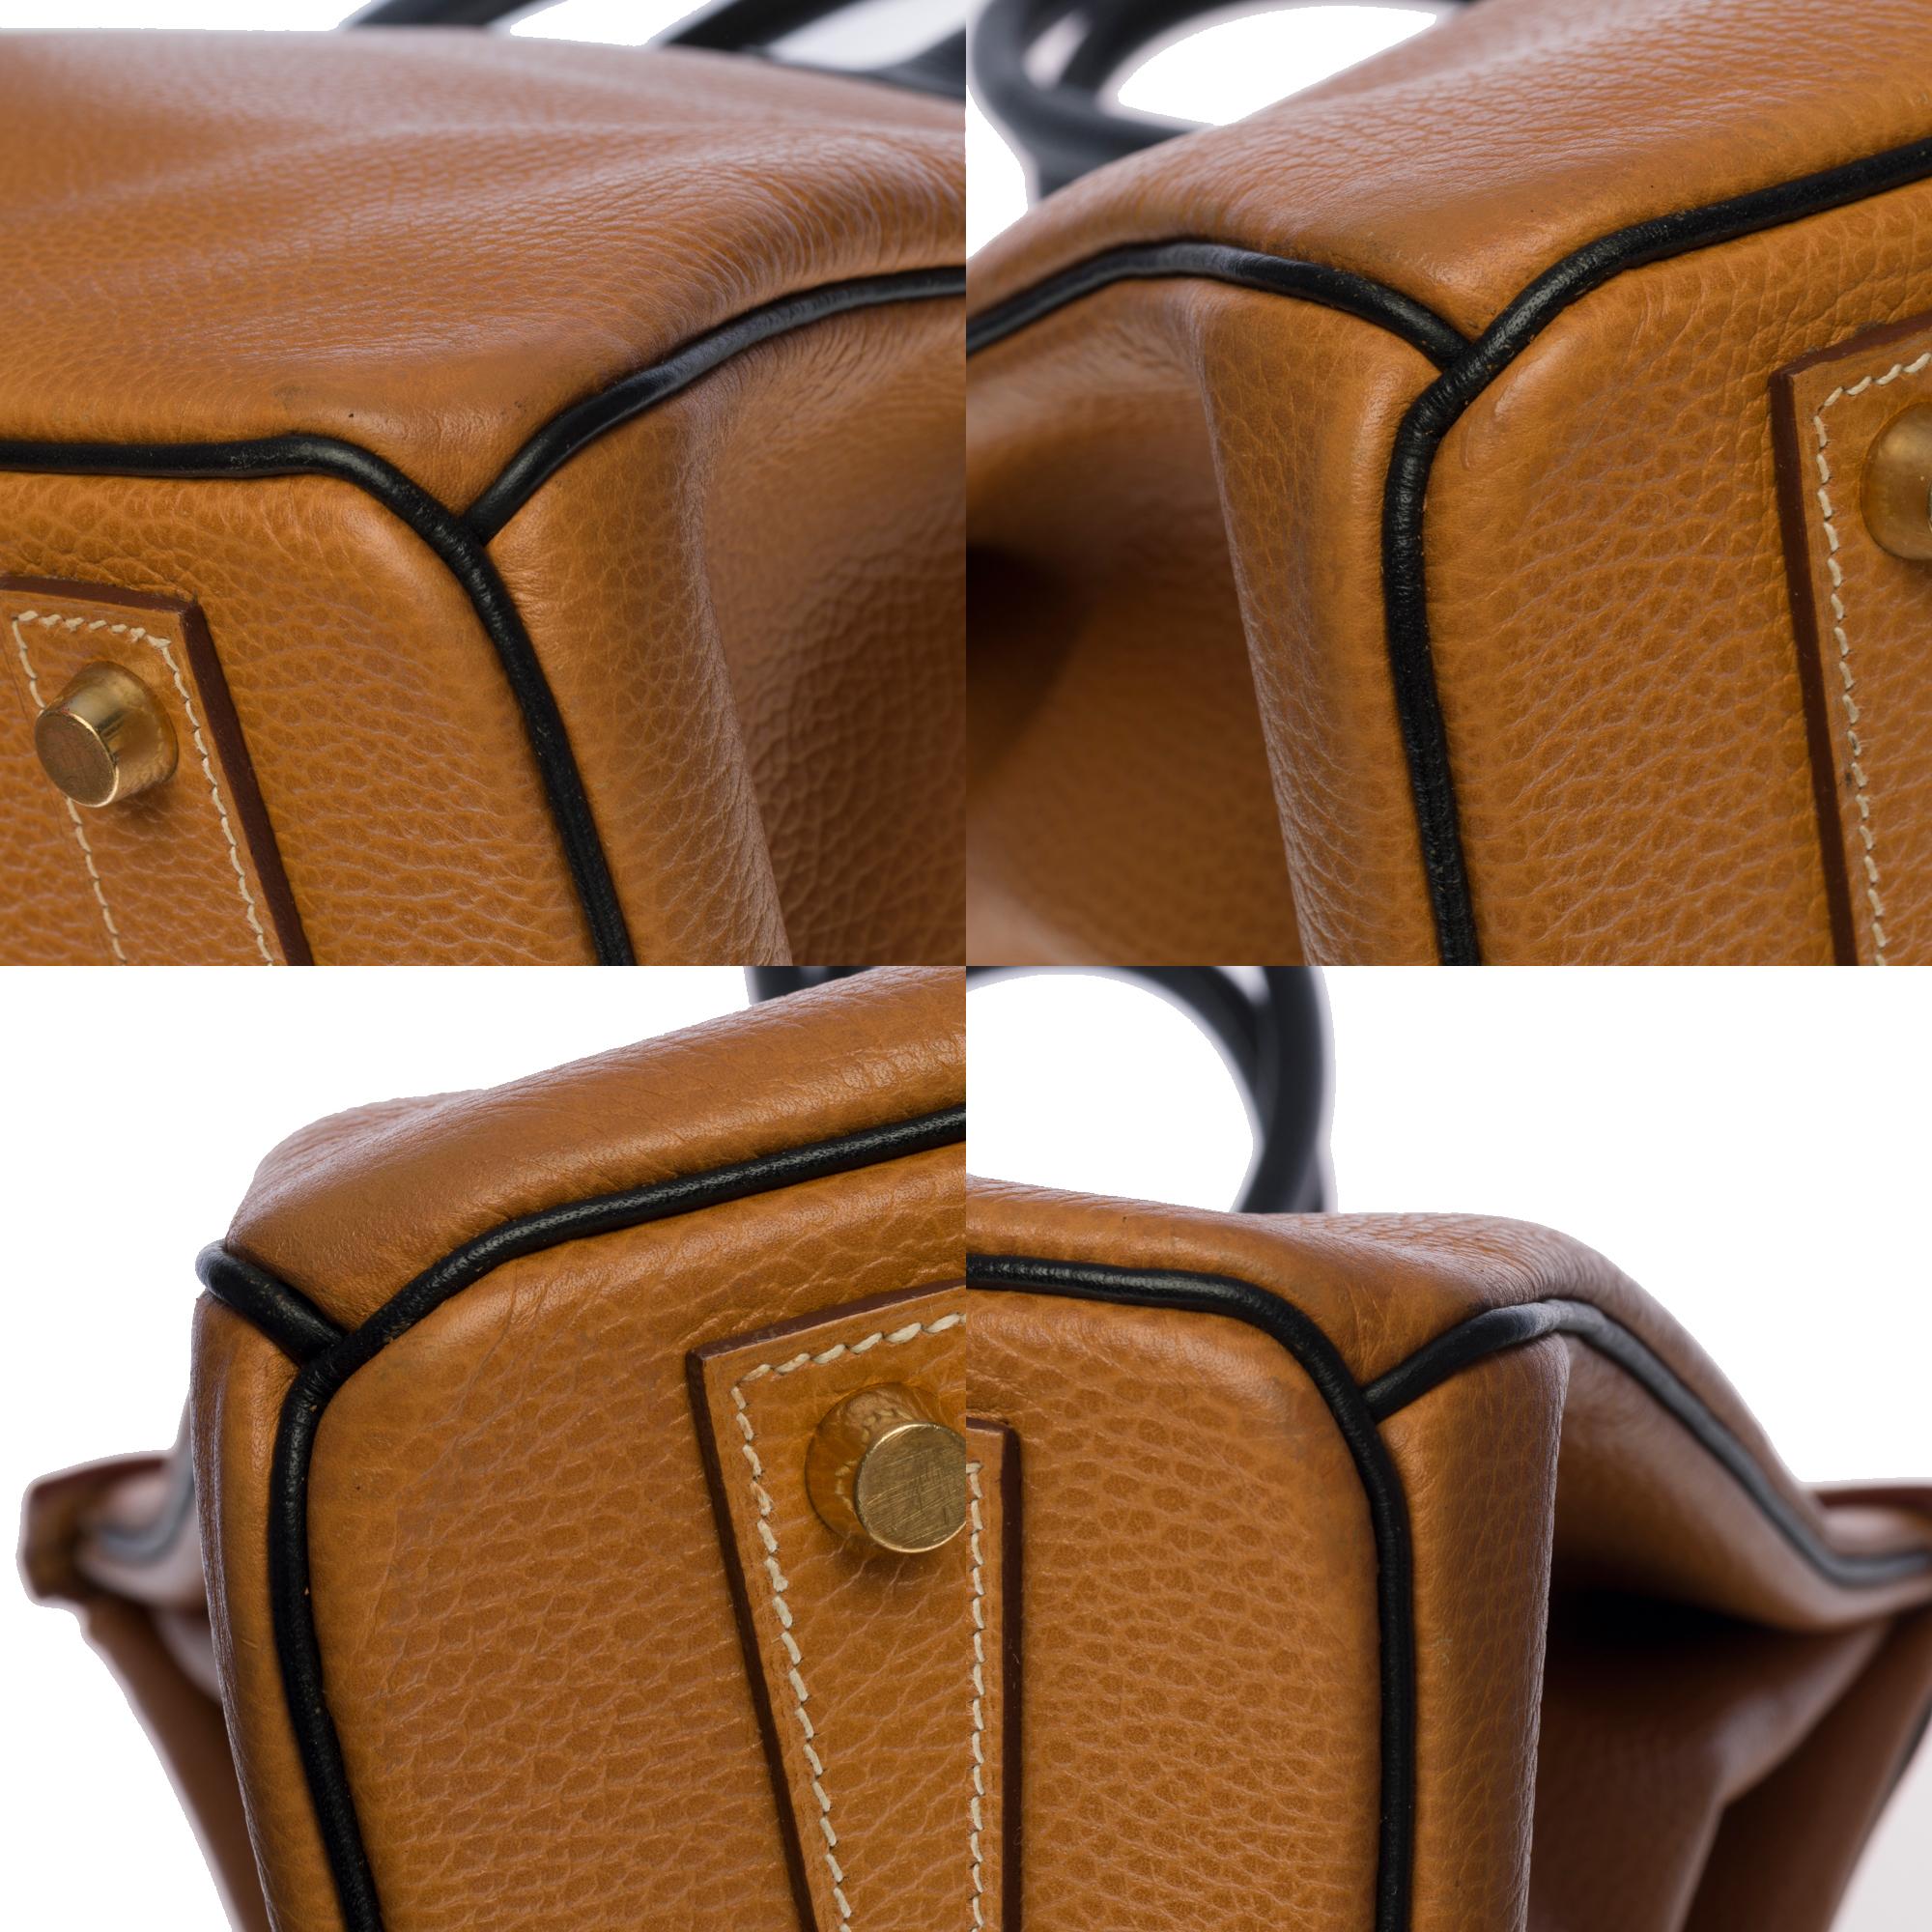 Rare Hermes Birkin 40cm handbag in Gold & black Vache Ardenne leather, GHW 4